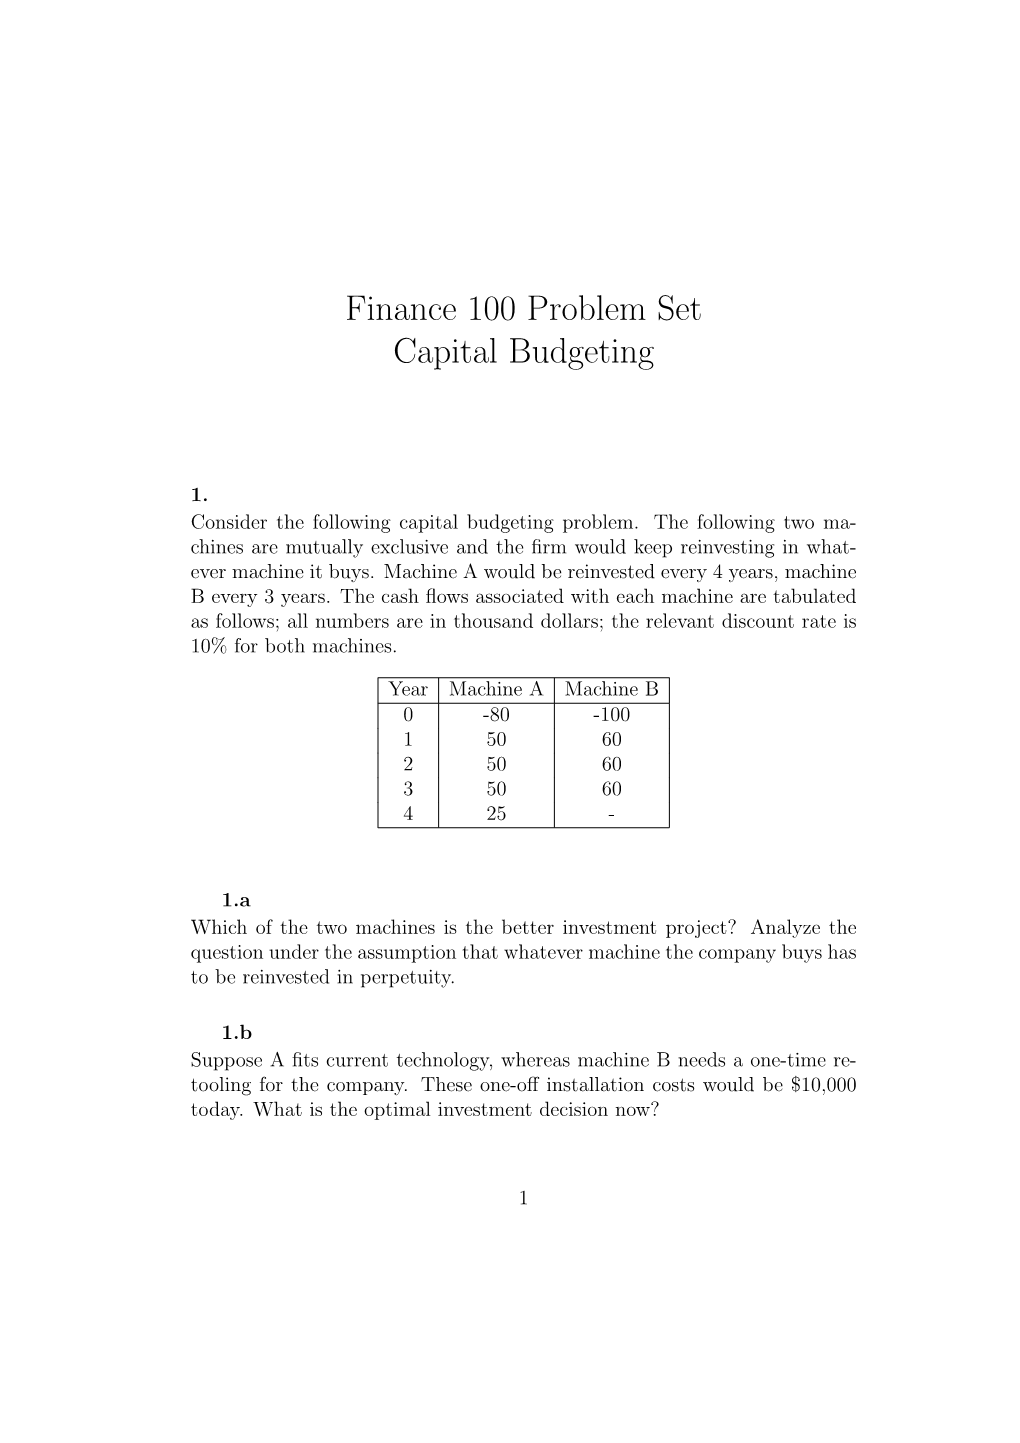 Finance 100 Problem Set Capital Budgeting